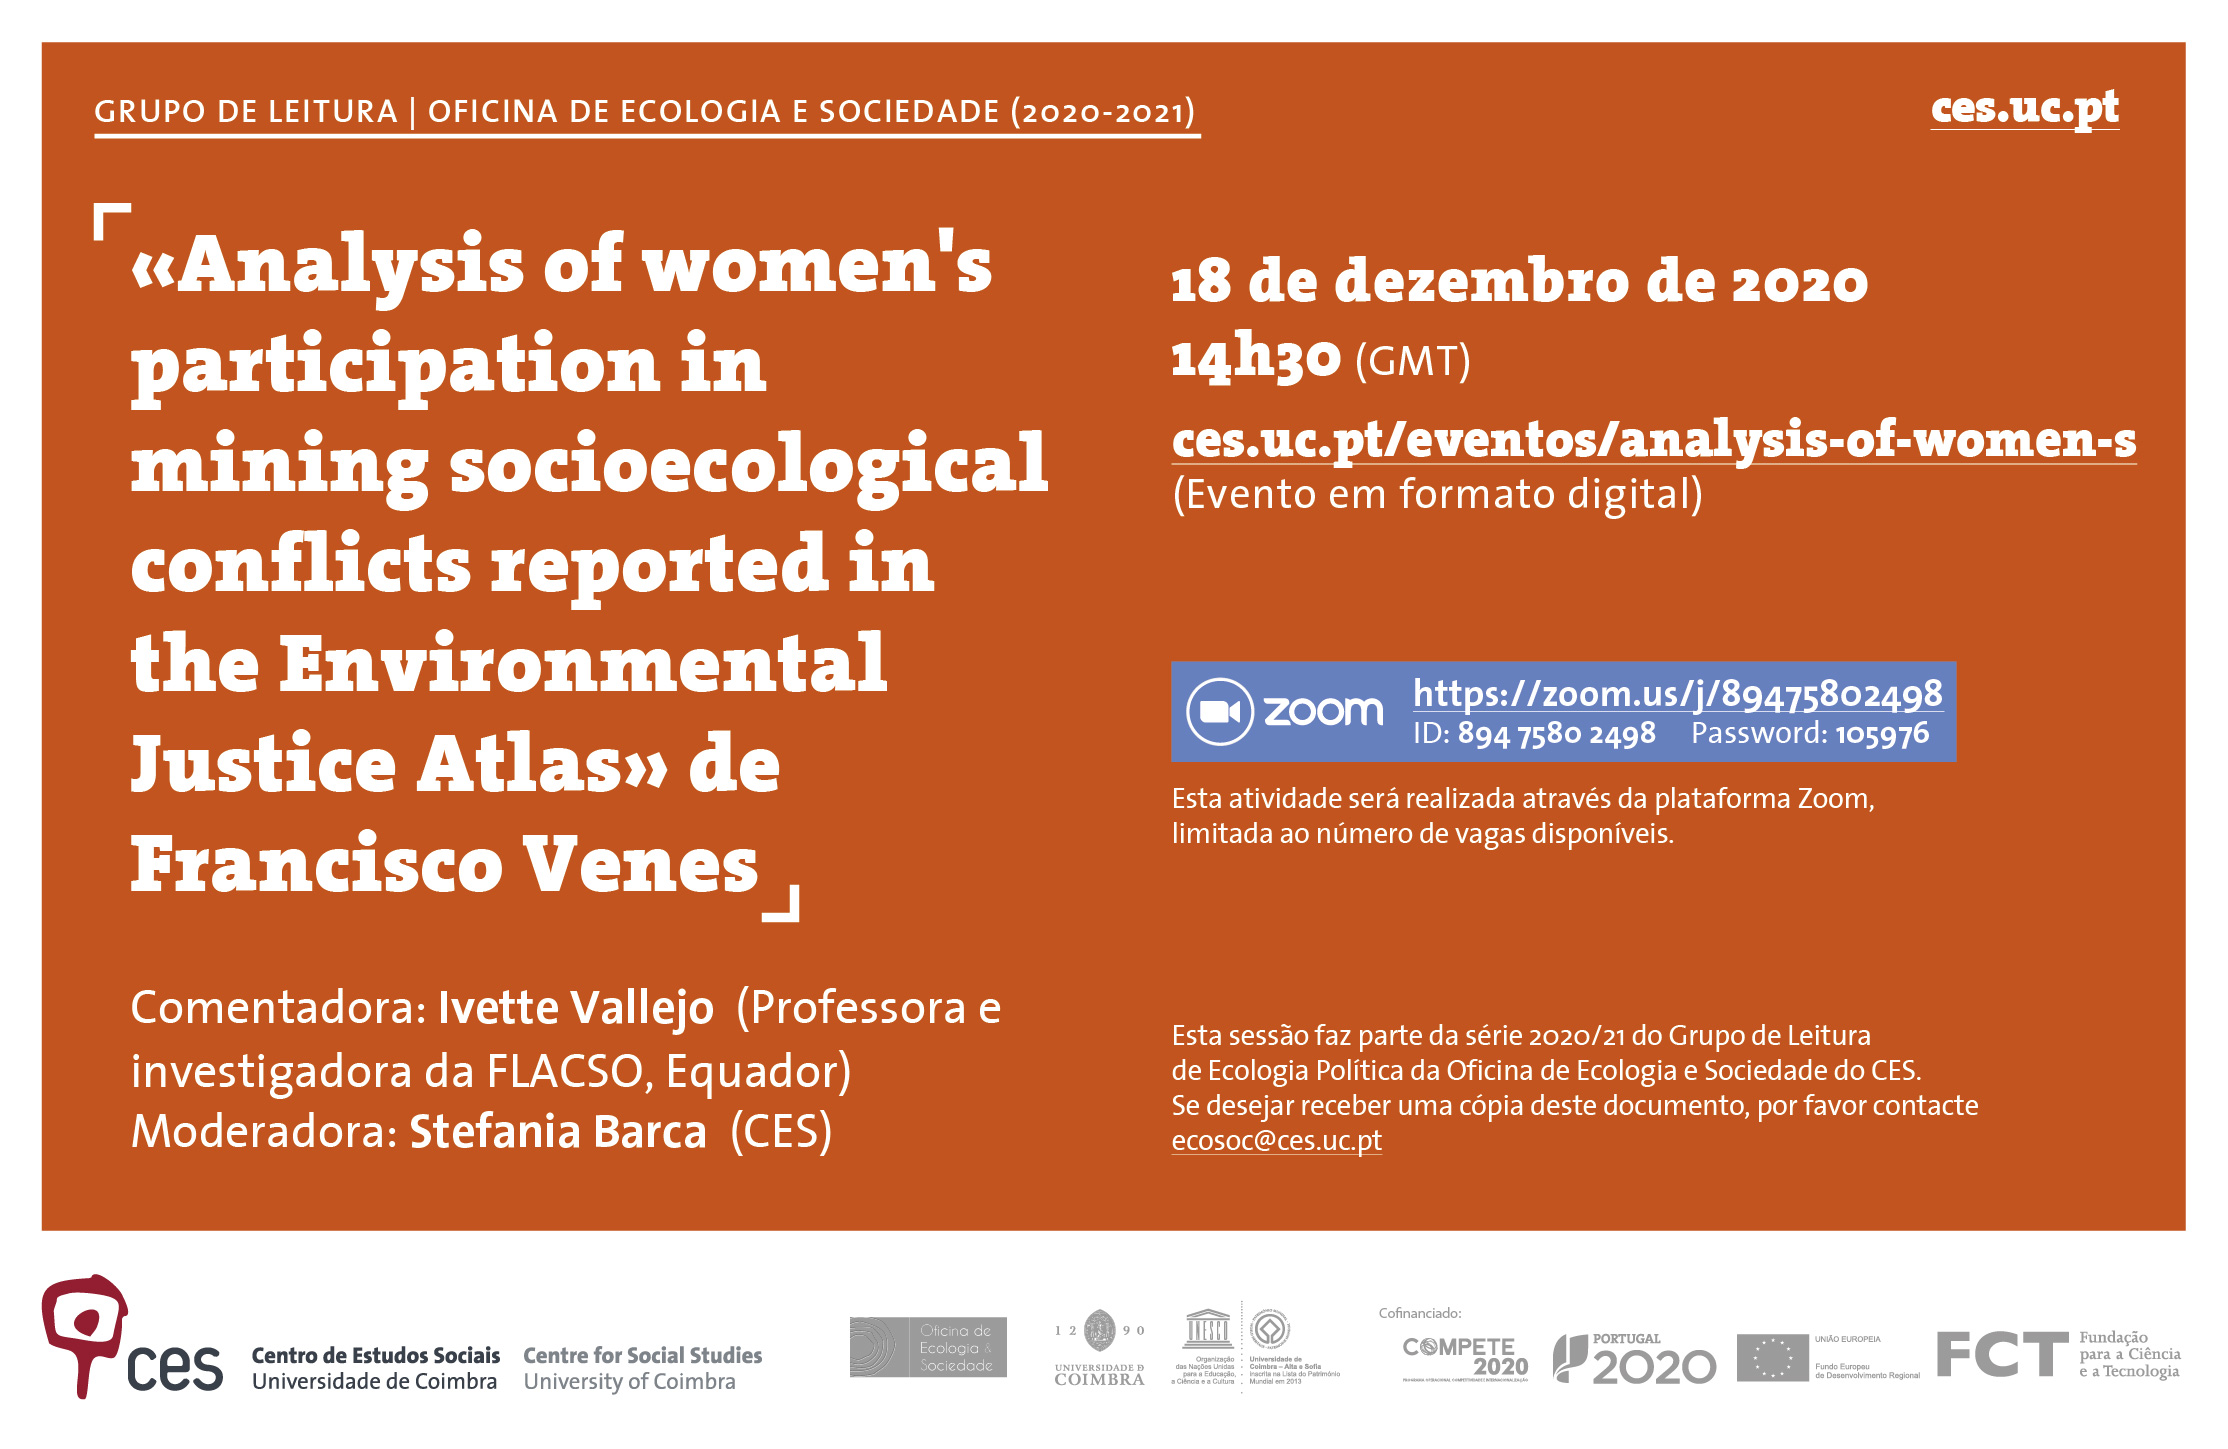 «Analysis of women's participation in mining socioecological conflicts reported in the Environmental Justice Atlas» de Francisco Venes<span id="edit_31767"><script>$(function() { $('#edit_31767').load( "/myces/user/editobj.php?tipo=evento&id=31767" ); });</script></span>